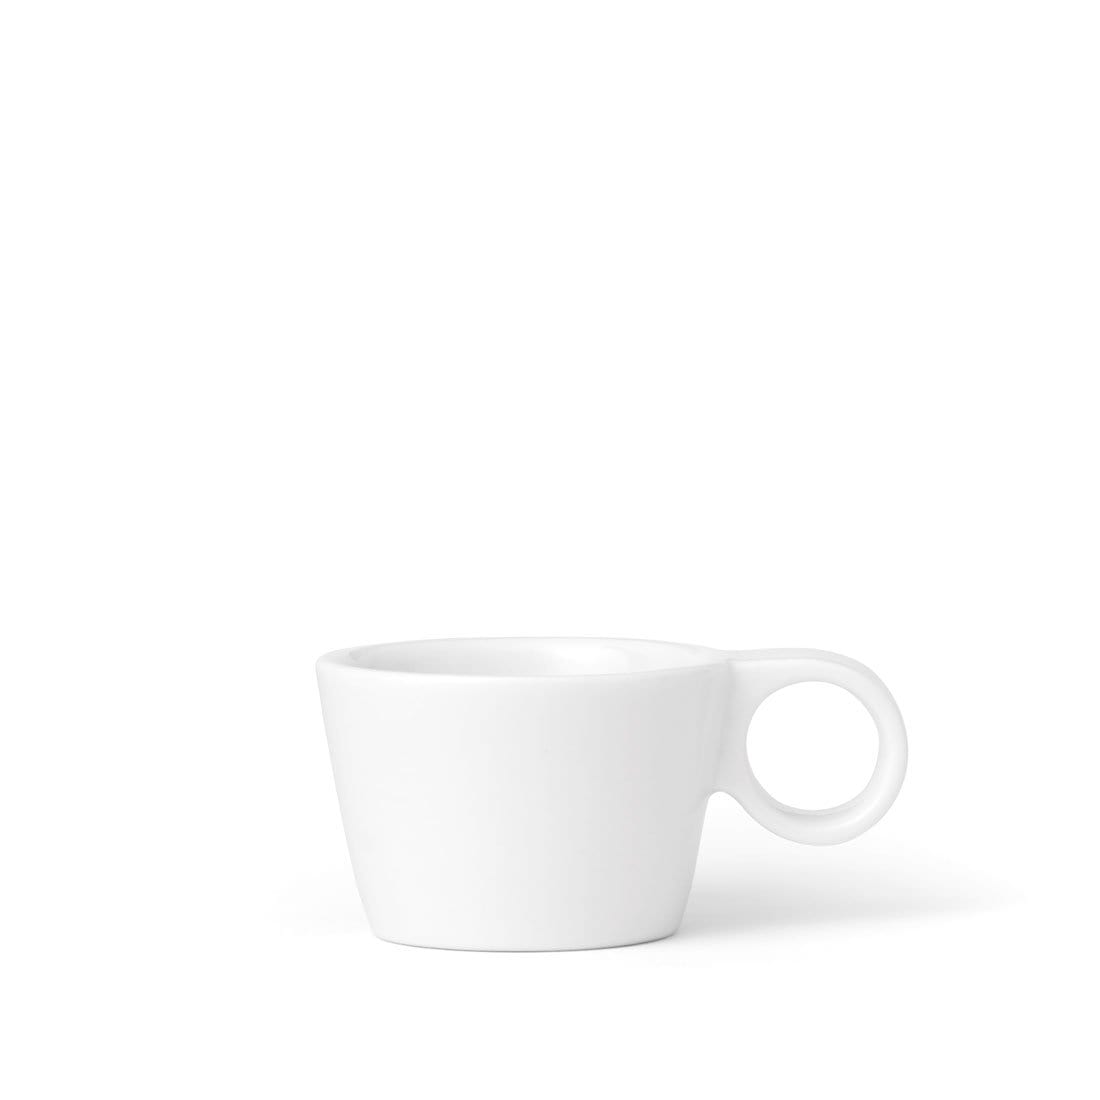 Jaimi™ Tea Cup Small - Set Of 4 Cups & Mugs VIVA Scandinavia 